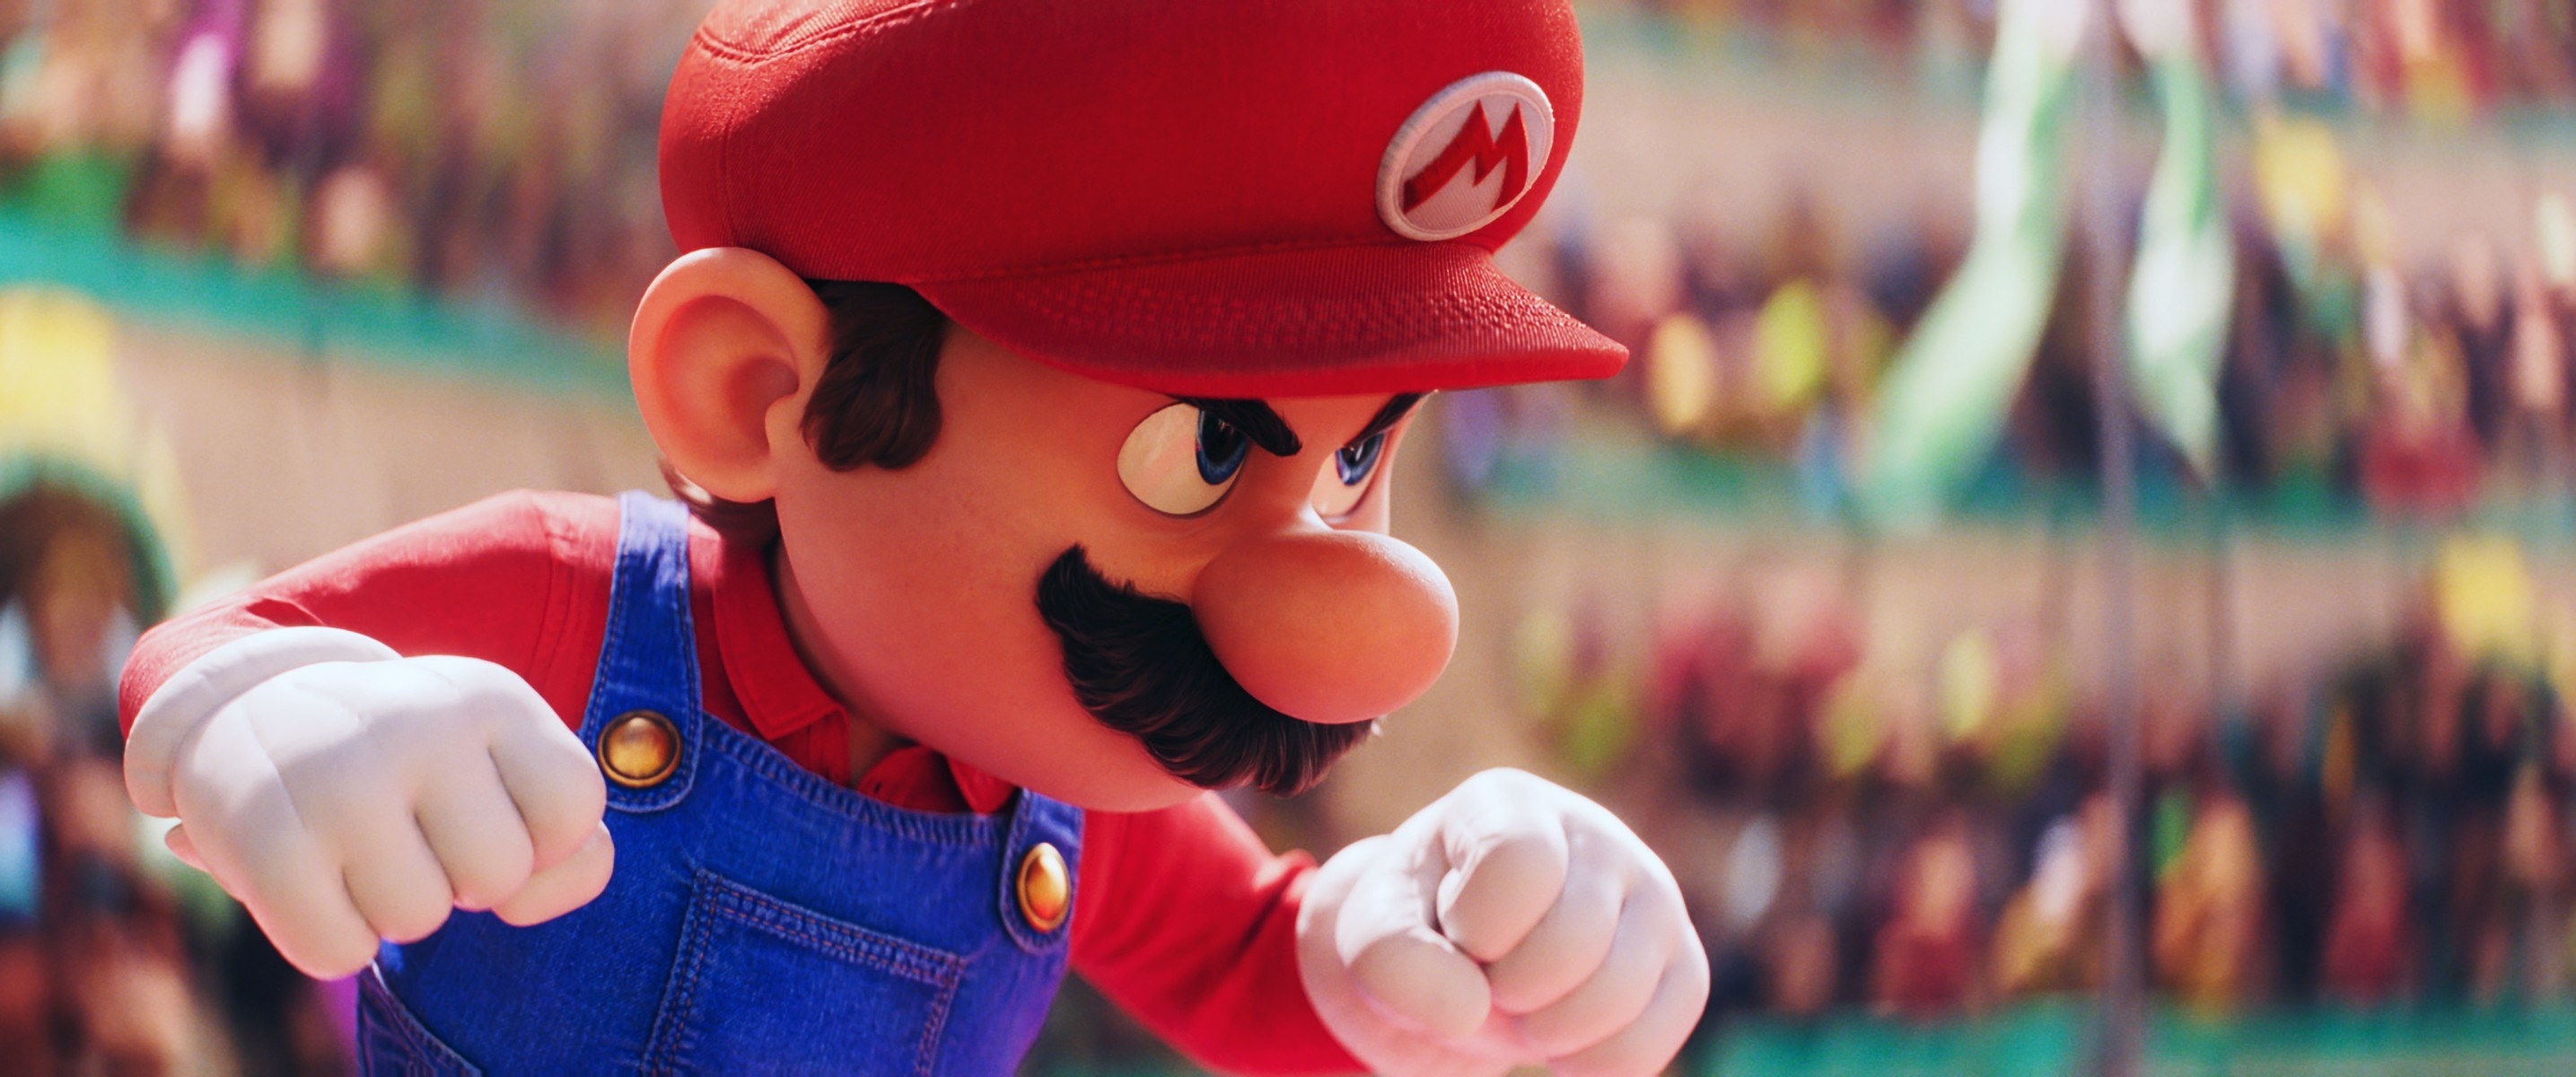 Mario (voiced by Chris Pratt) posing, ready to battle